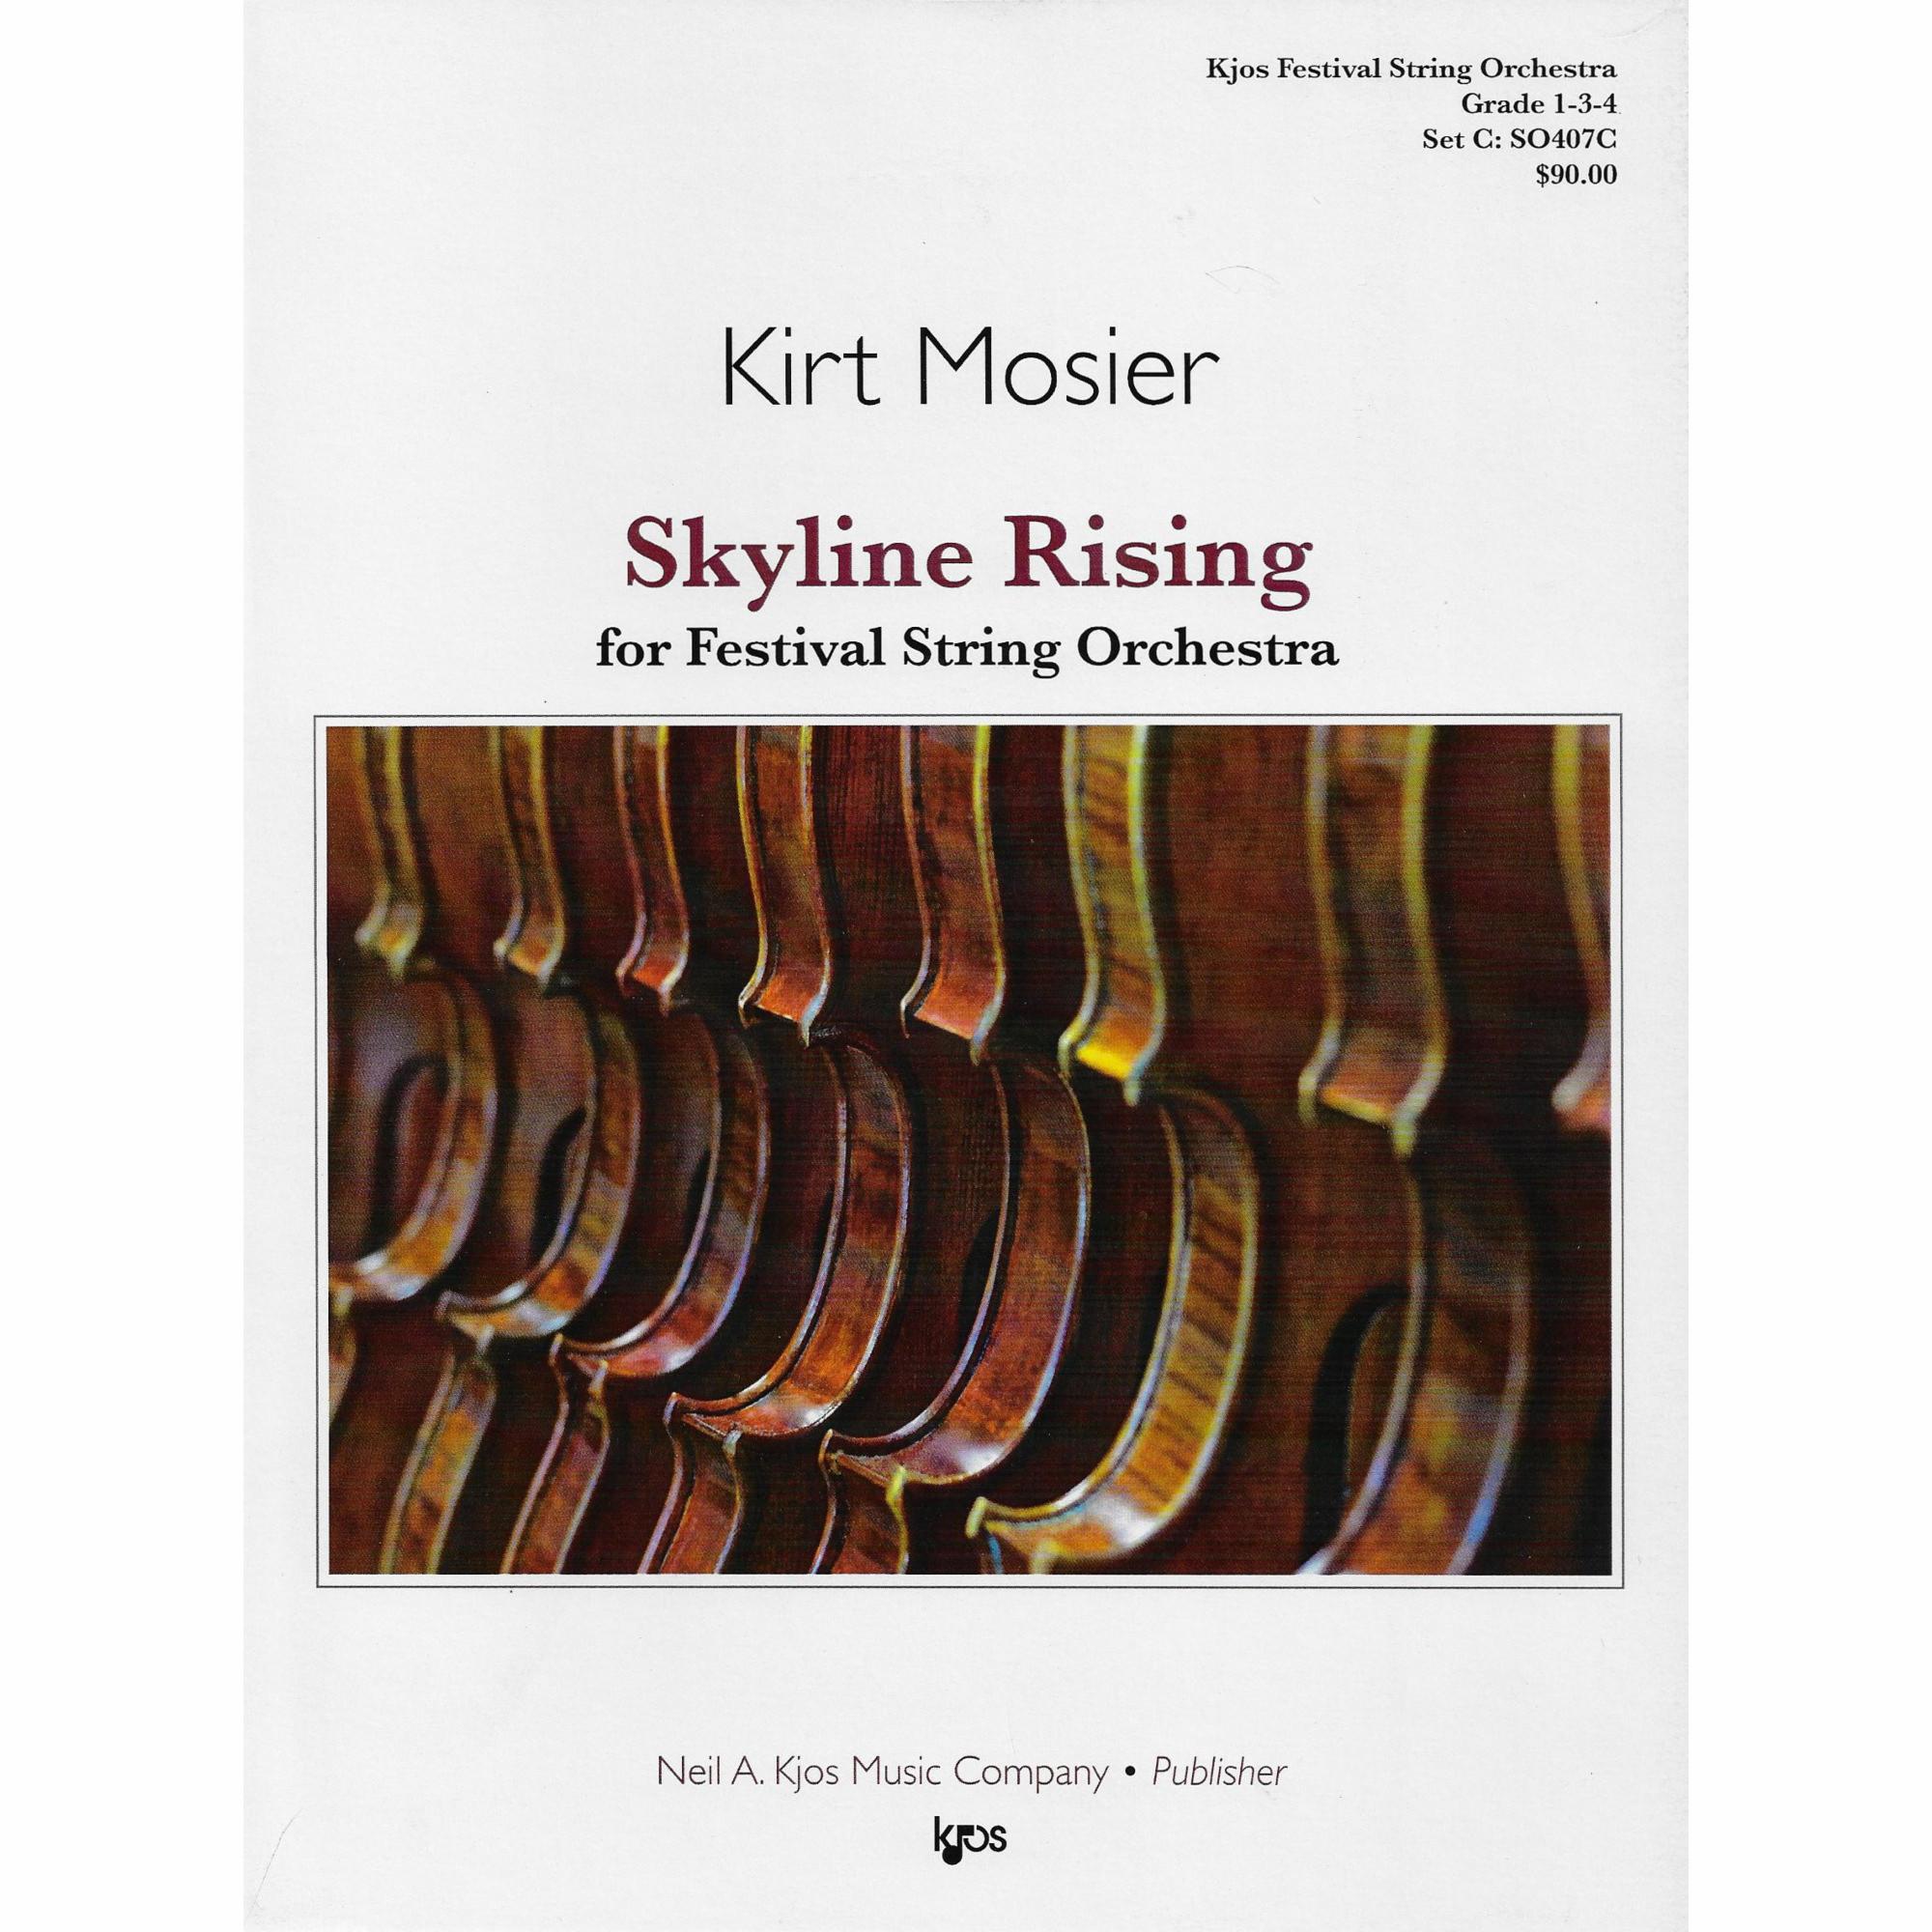 Skyline Rising for Festival String Orchestra